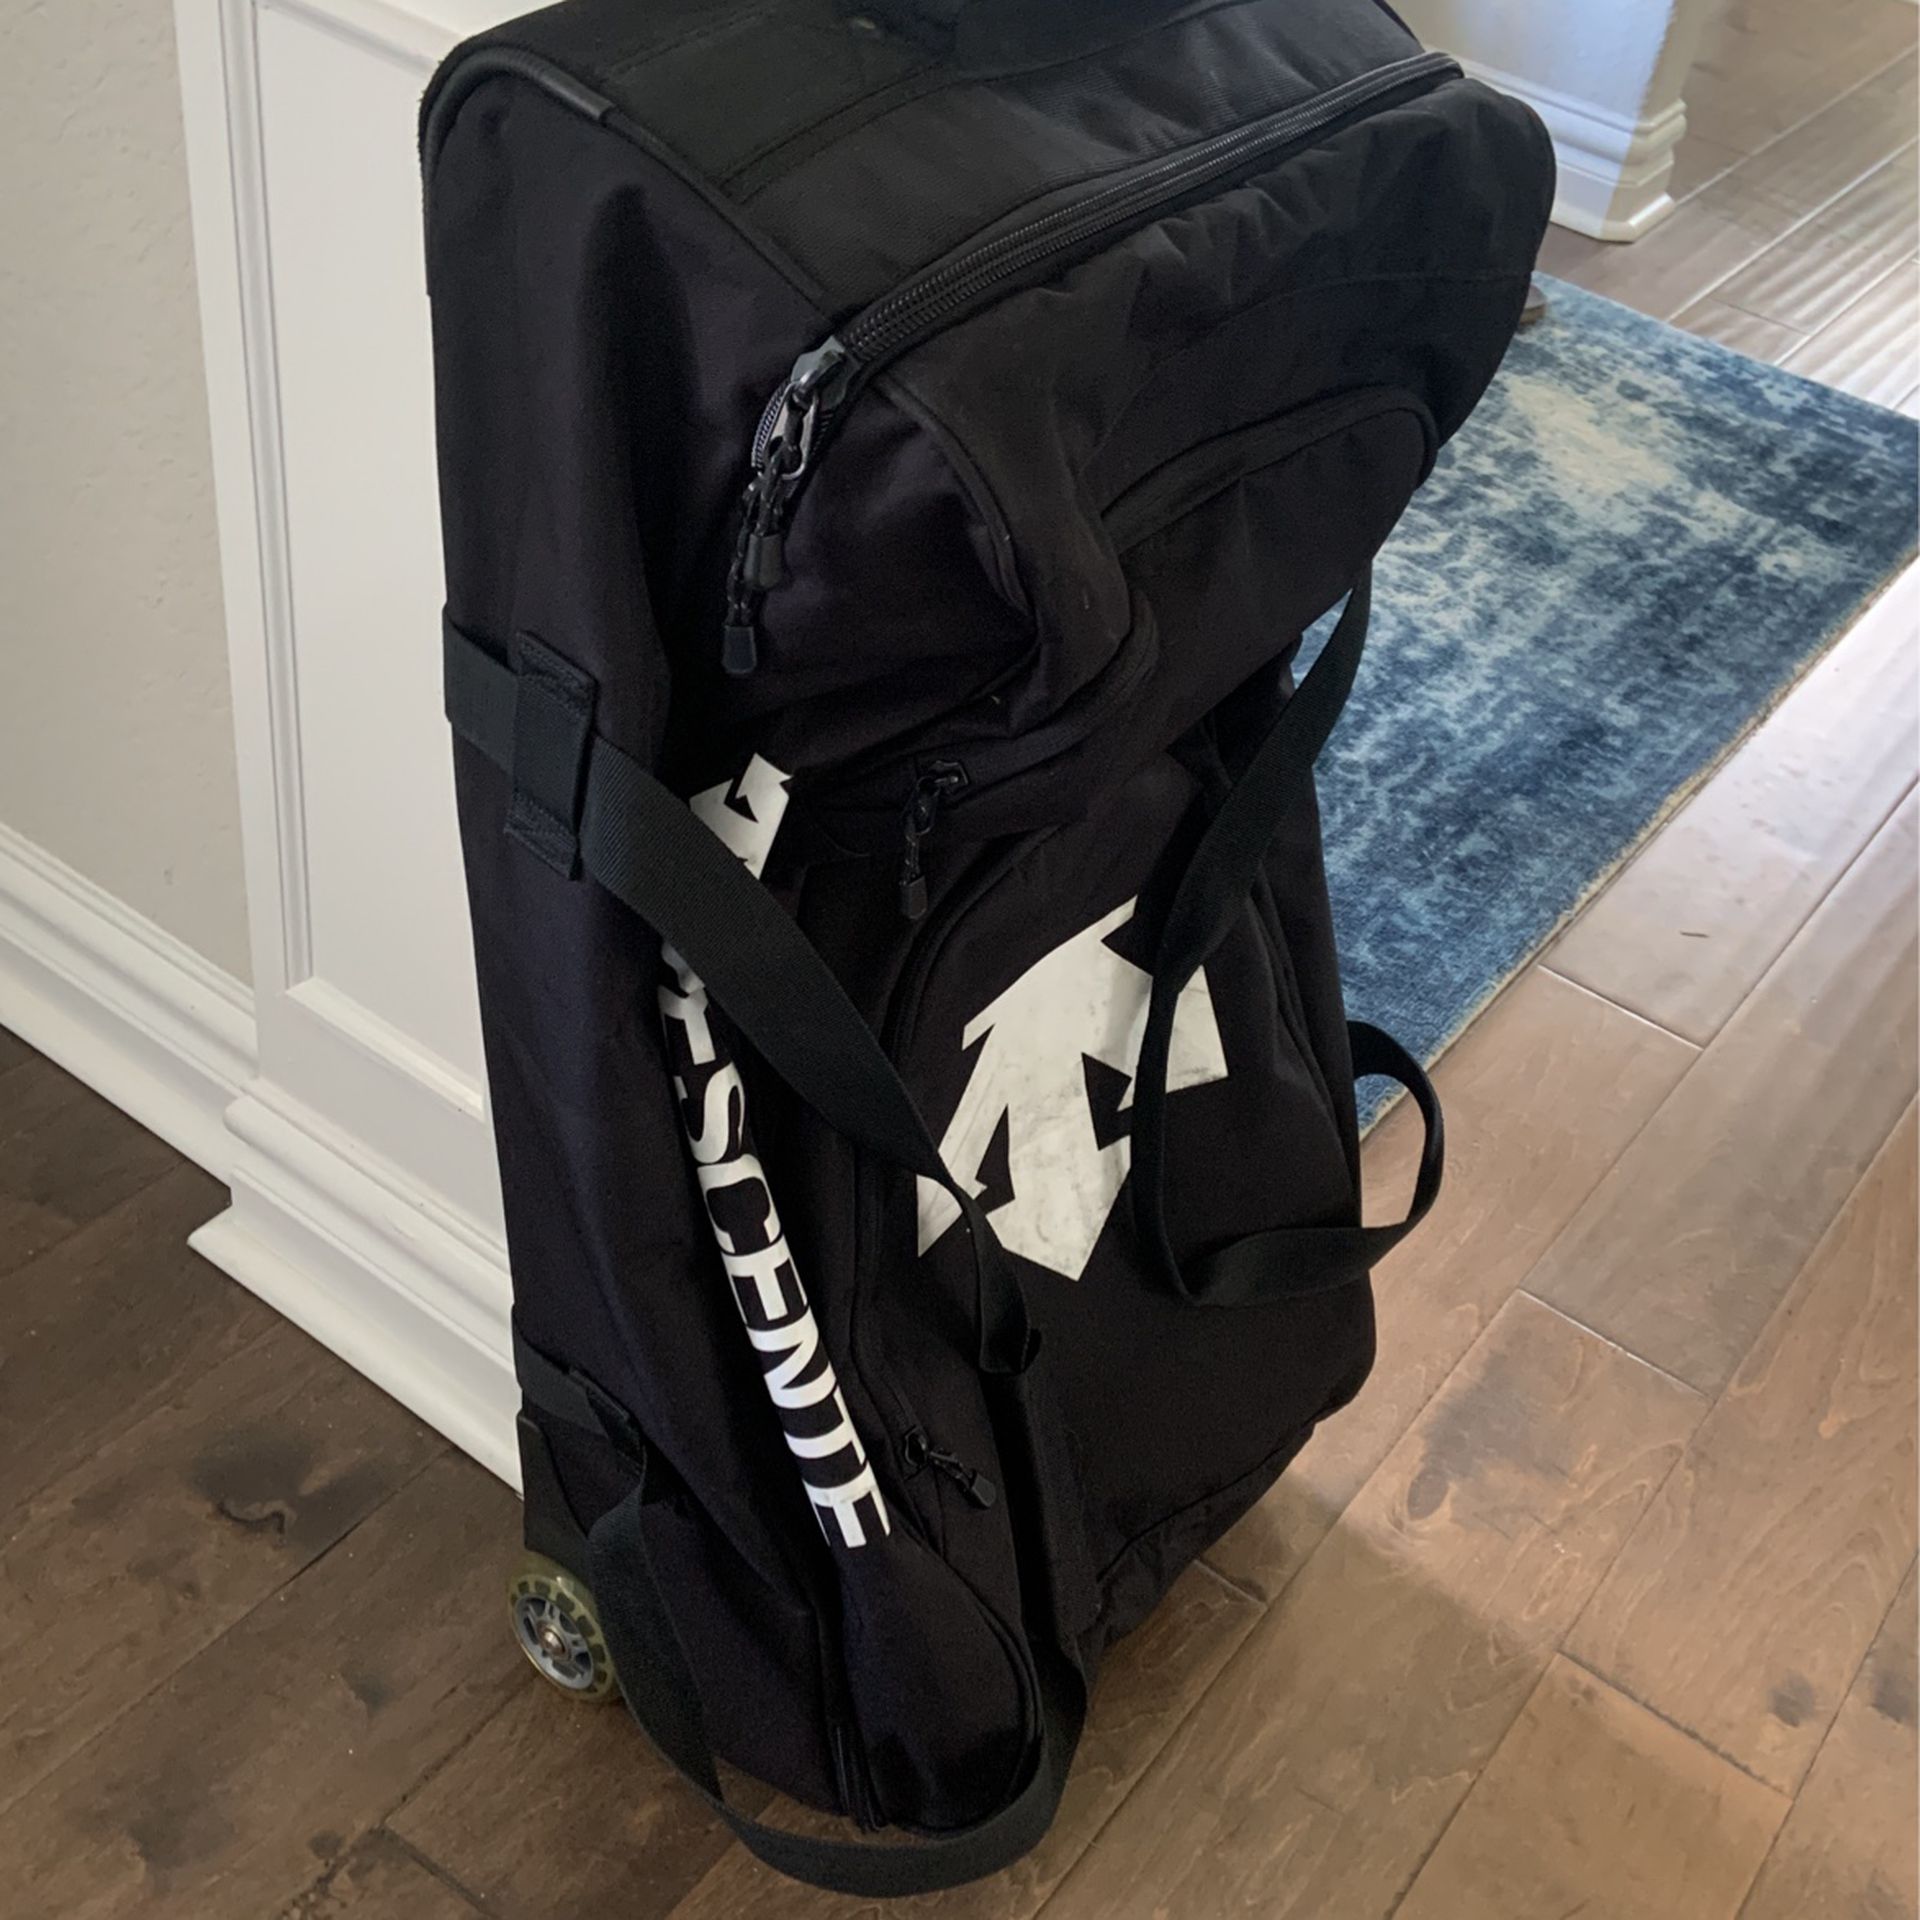 DESCENTE Travel Roller Bag 30”x16”x12”